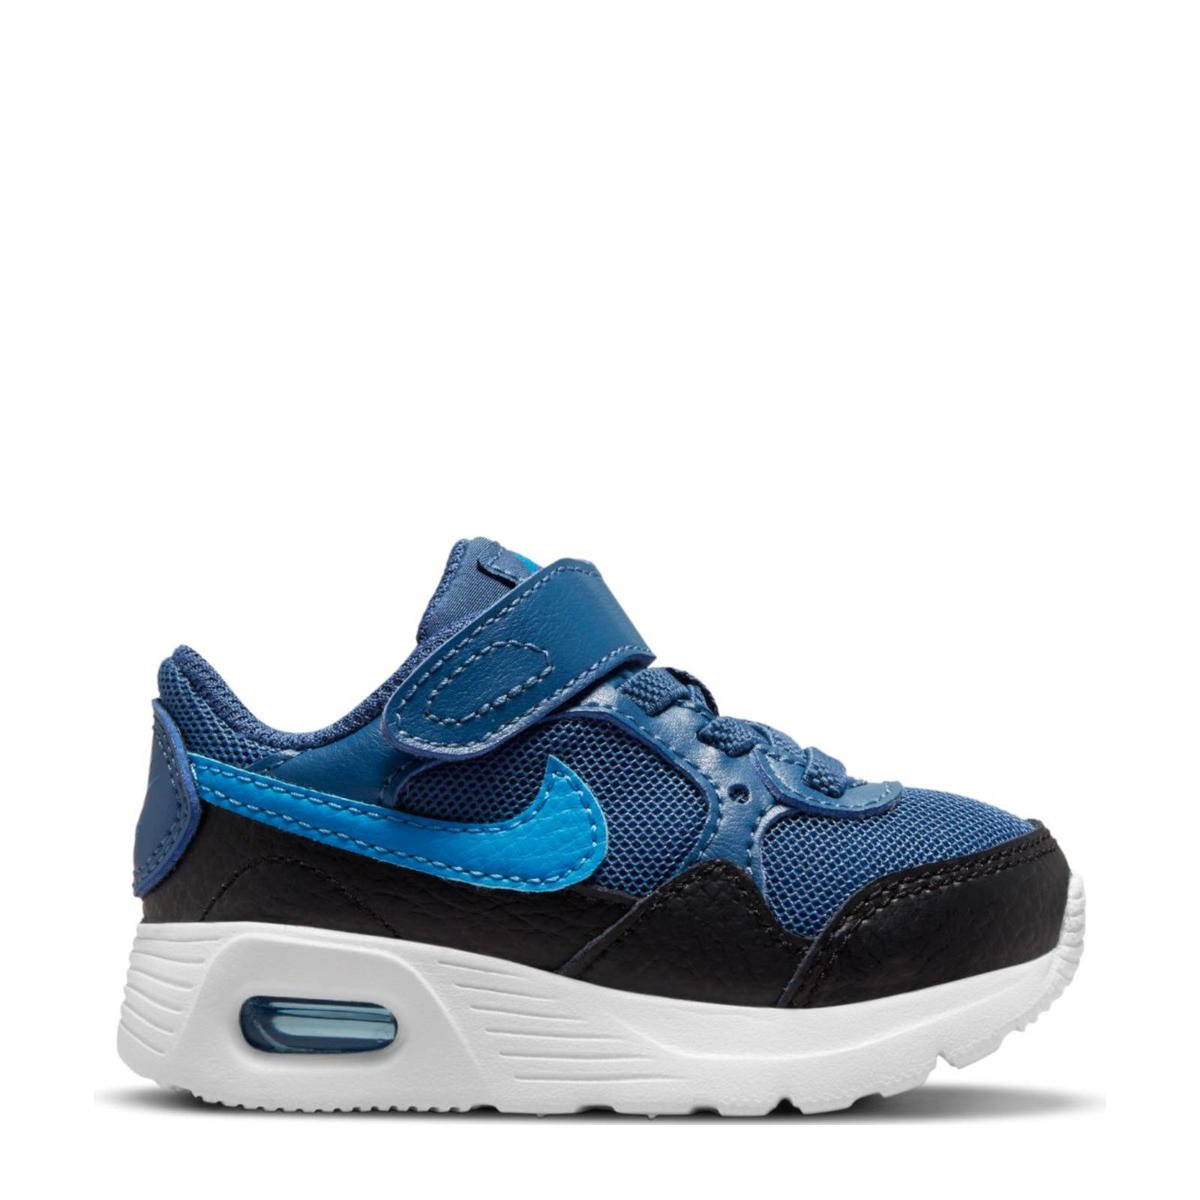 struik Kaal voeden Nike Air Max sneakers donkerblauw/blauw | wehkamp